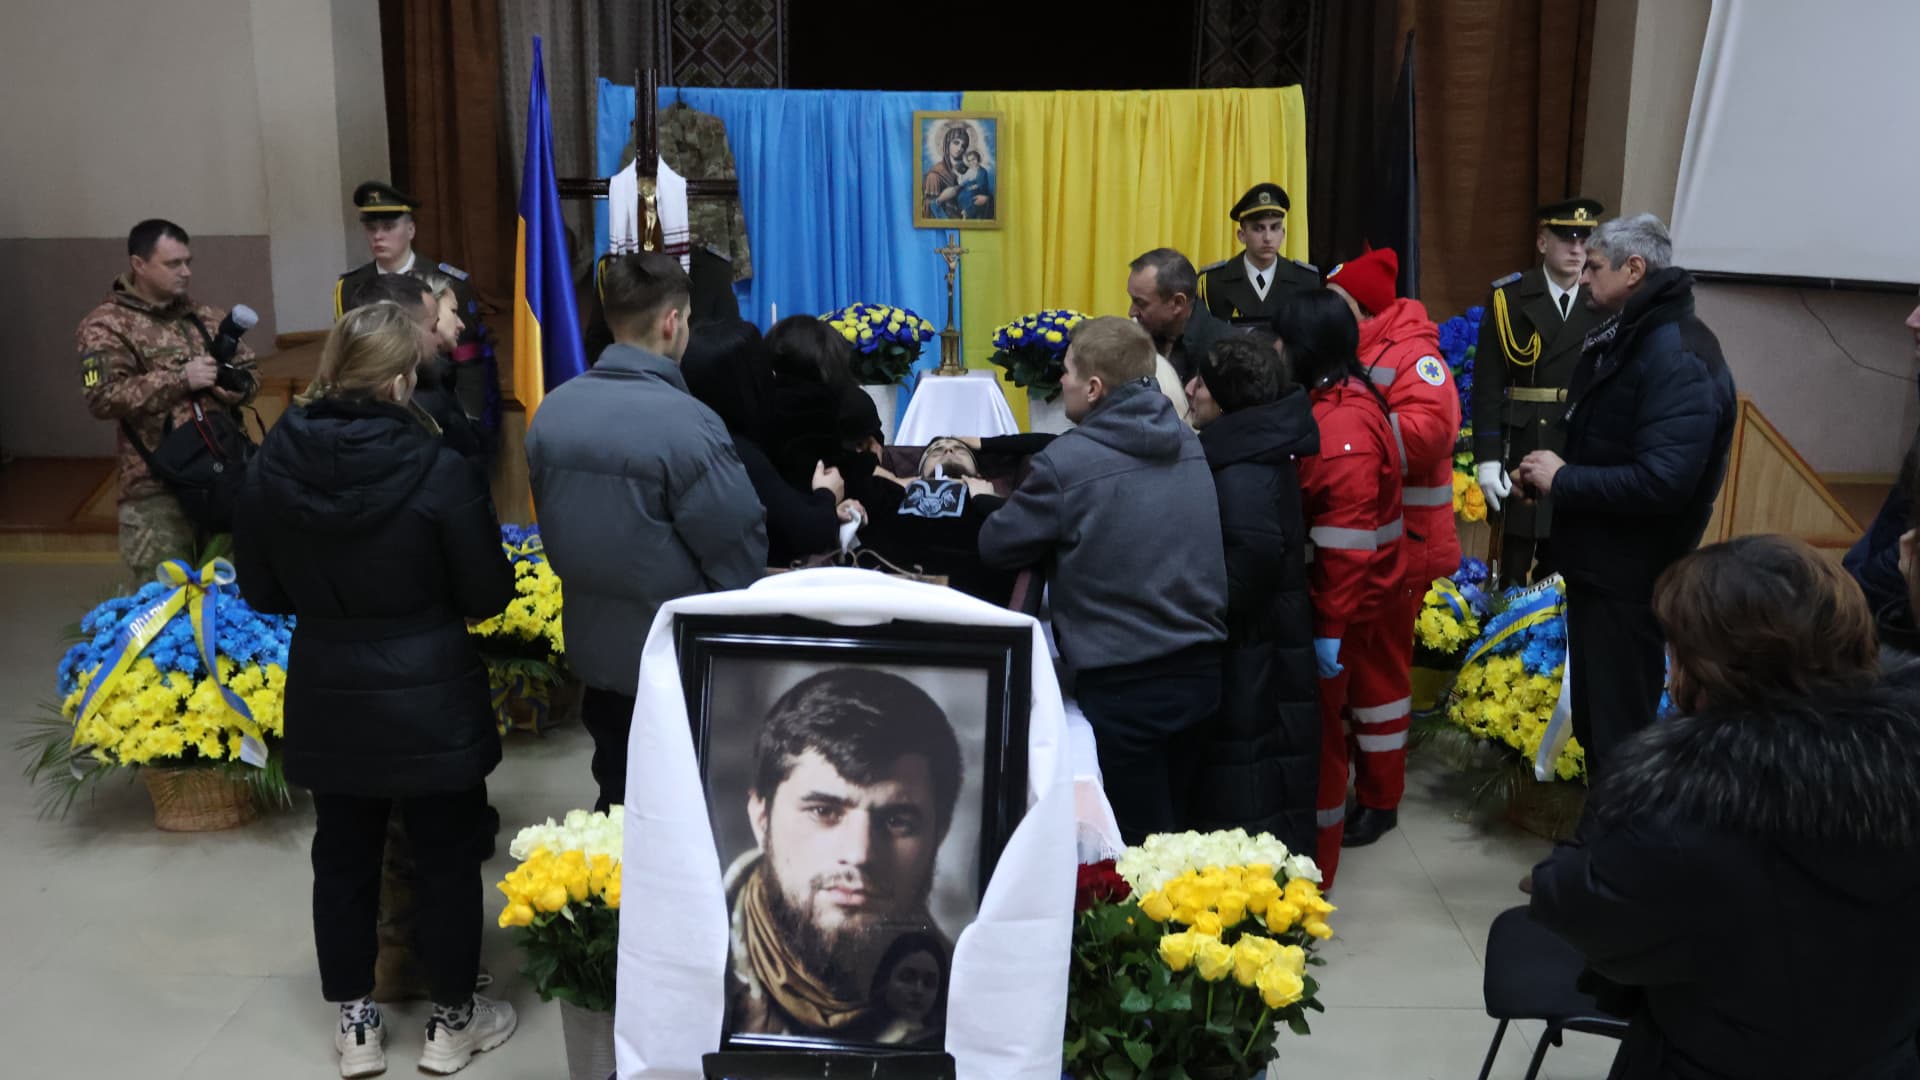  The family mourns near the coffin during the farewell ceremony for the Hero of Ukraine Dmytro Kotsiubailo “Da Vinci” on March 9, 2023 in Bovshiv, Ivano-Frankivsk Oblast, Ukraine. 